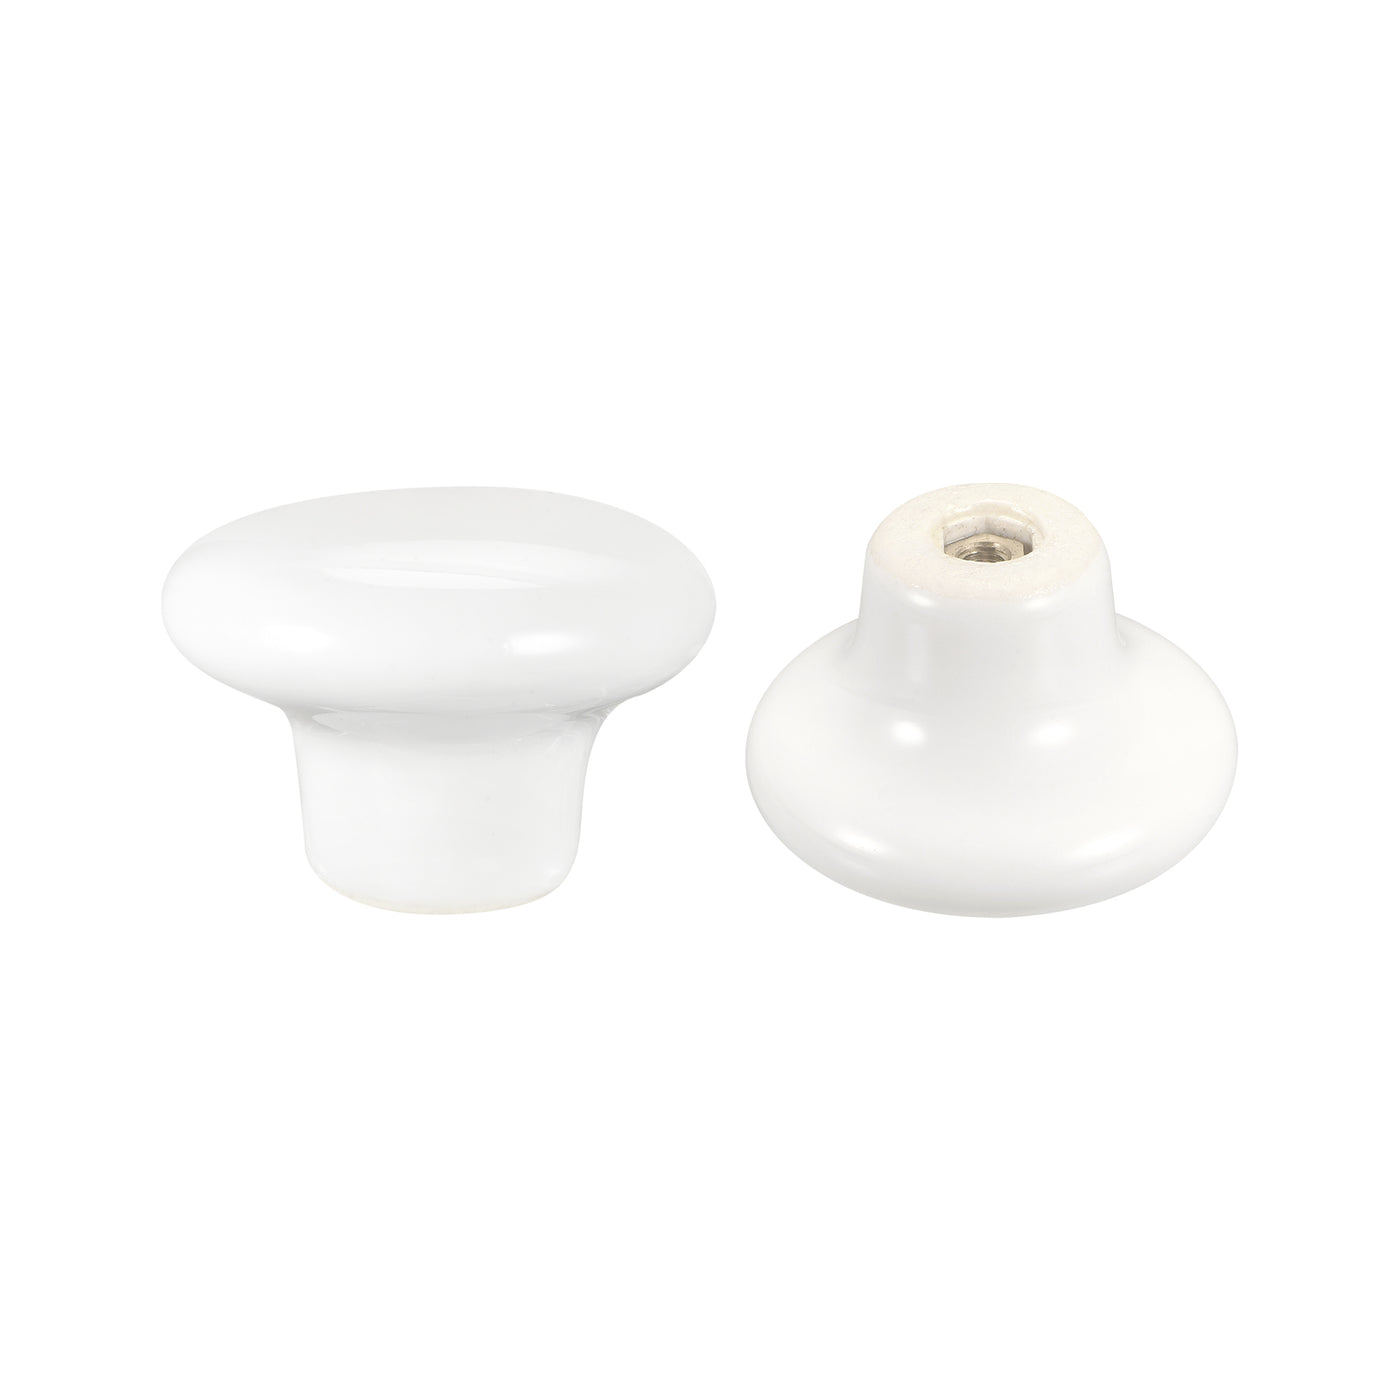 uxcell Uxcell Ceramic Drawer Knobs 10pcs Mushroom Shape Pulls 1.1"x1.5" for Dresser(White)